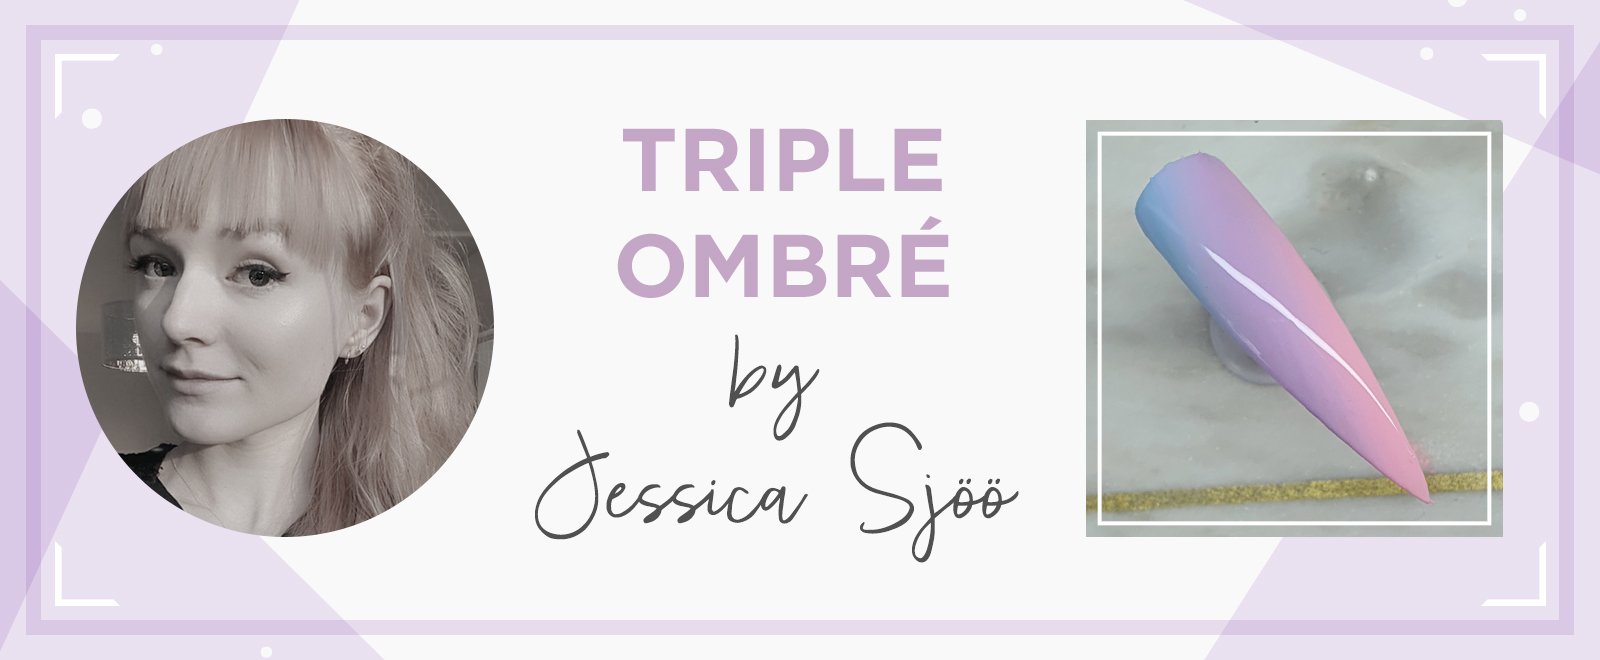 SBS_header_template_1600x660_triple-ombre_Jessica-Sjöö